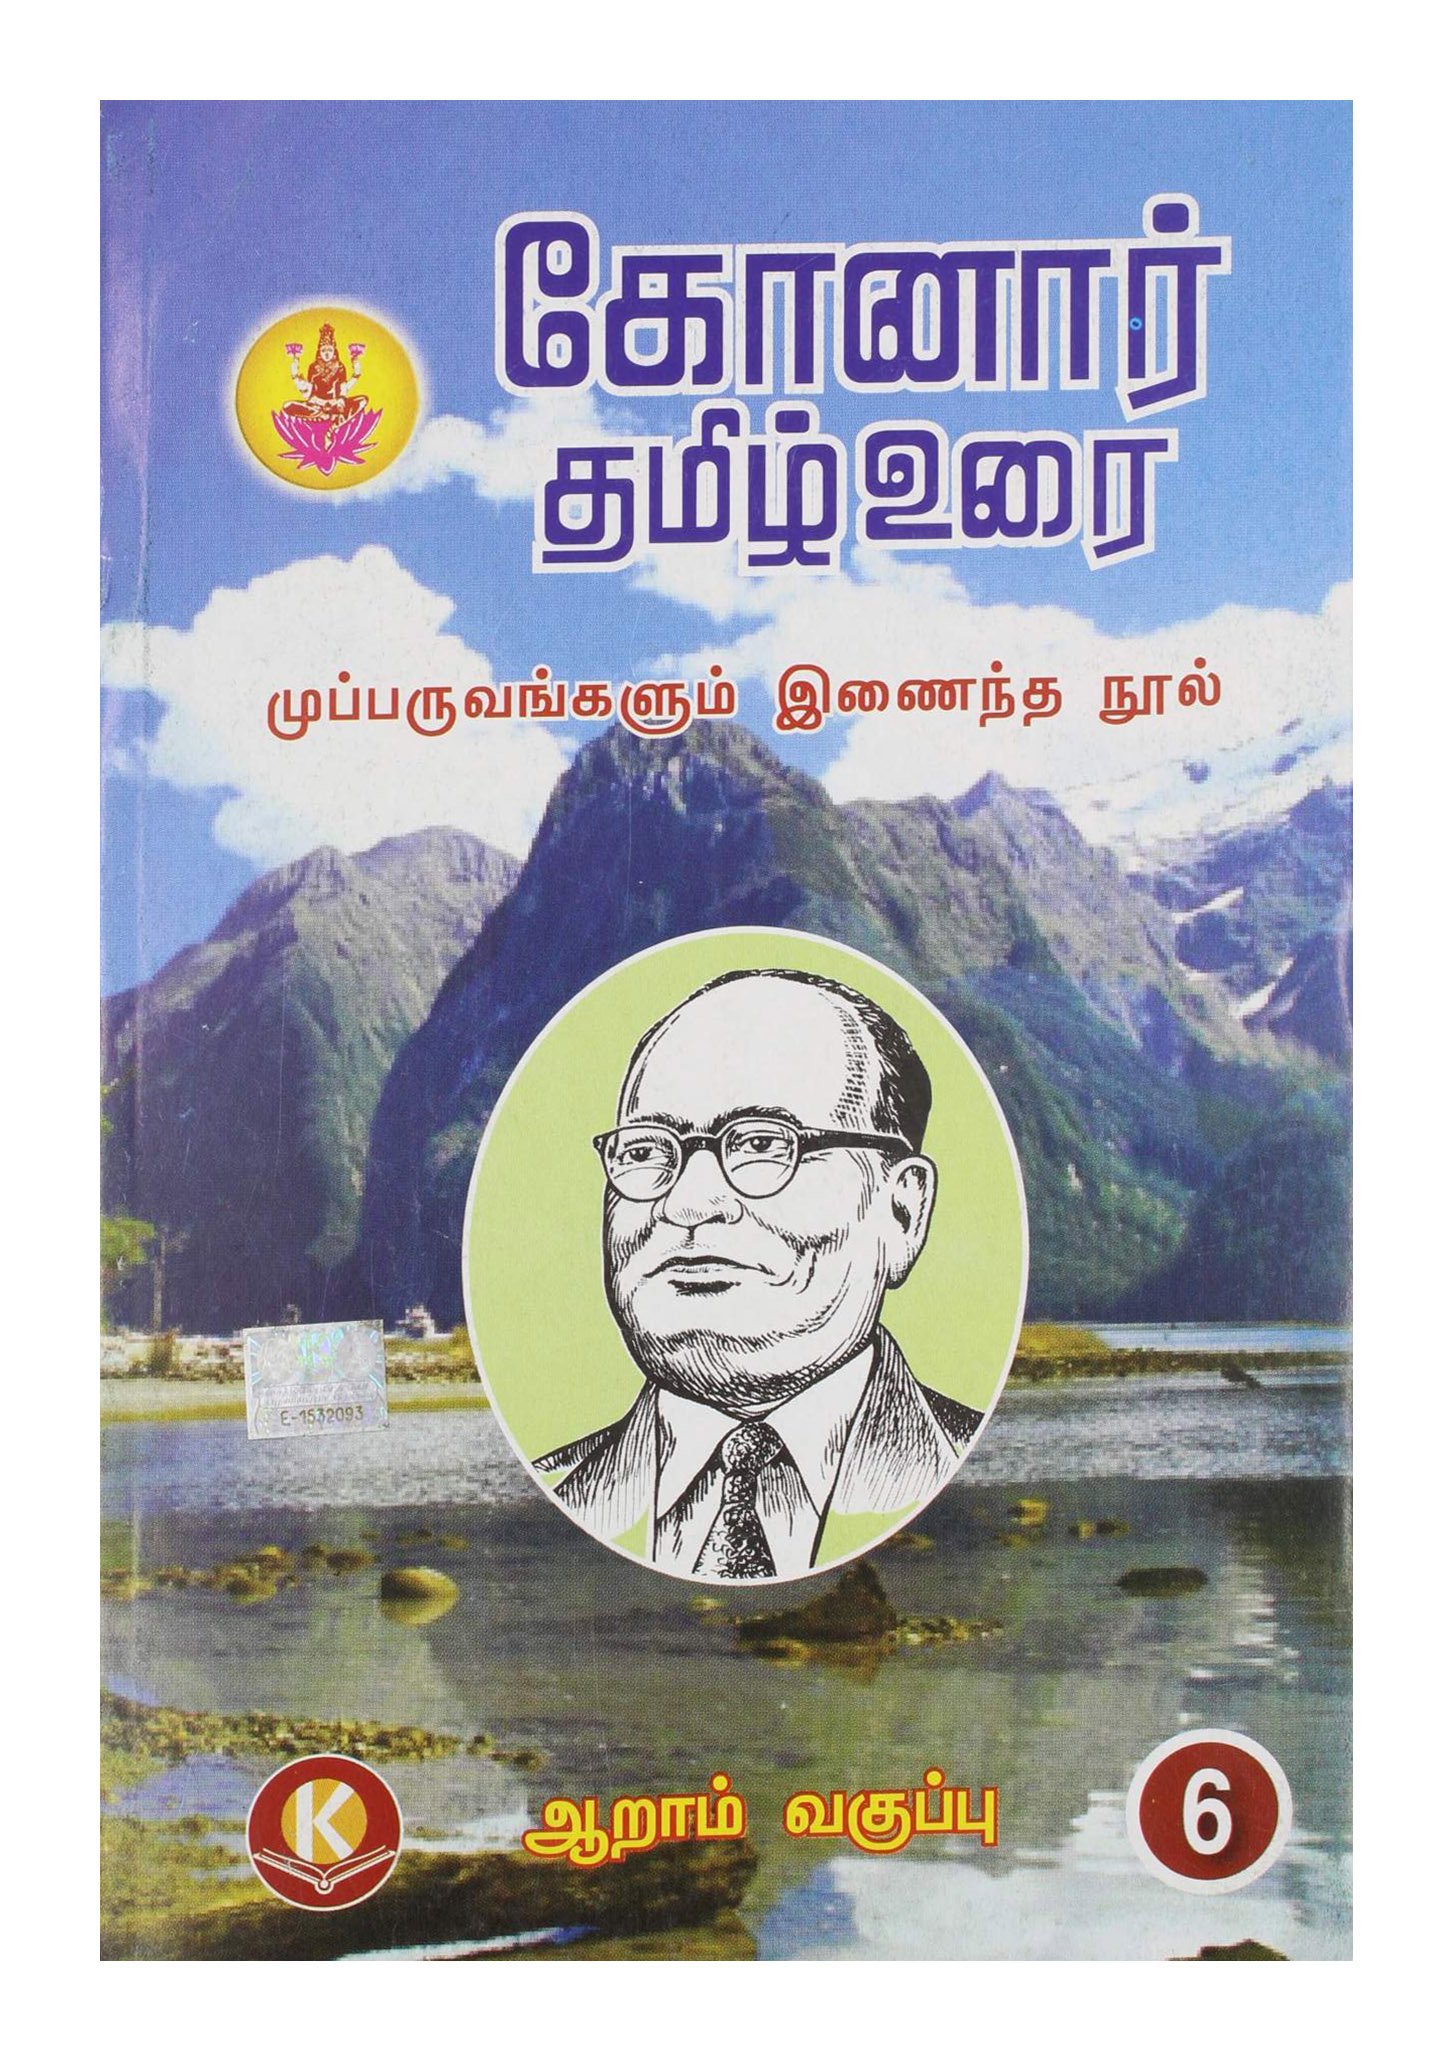 9th Tamil Konar Guide 2018 Pdf Download